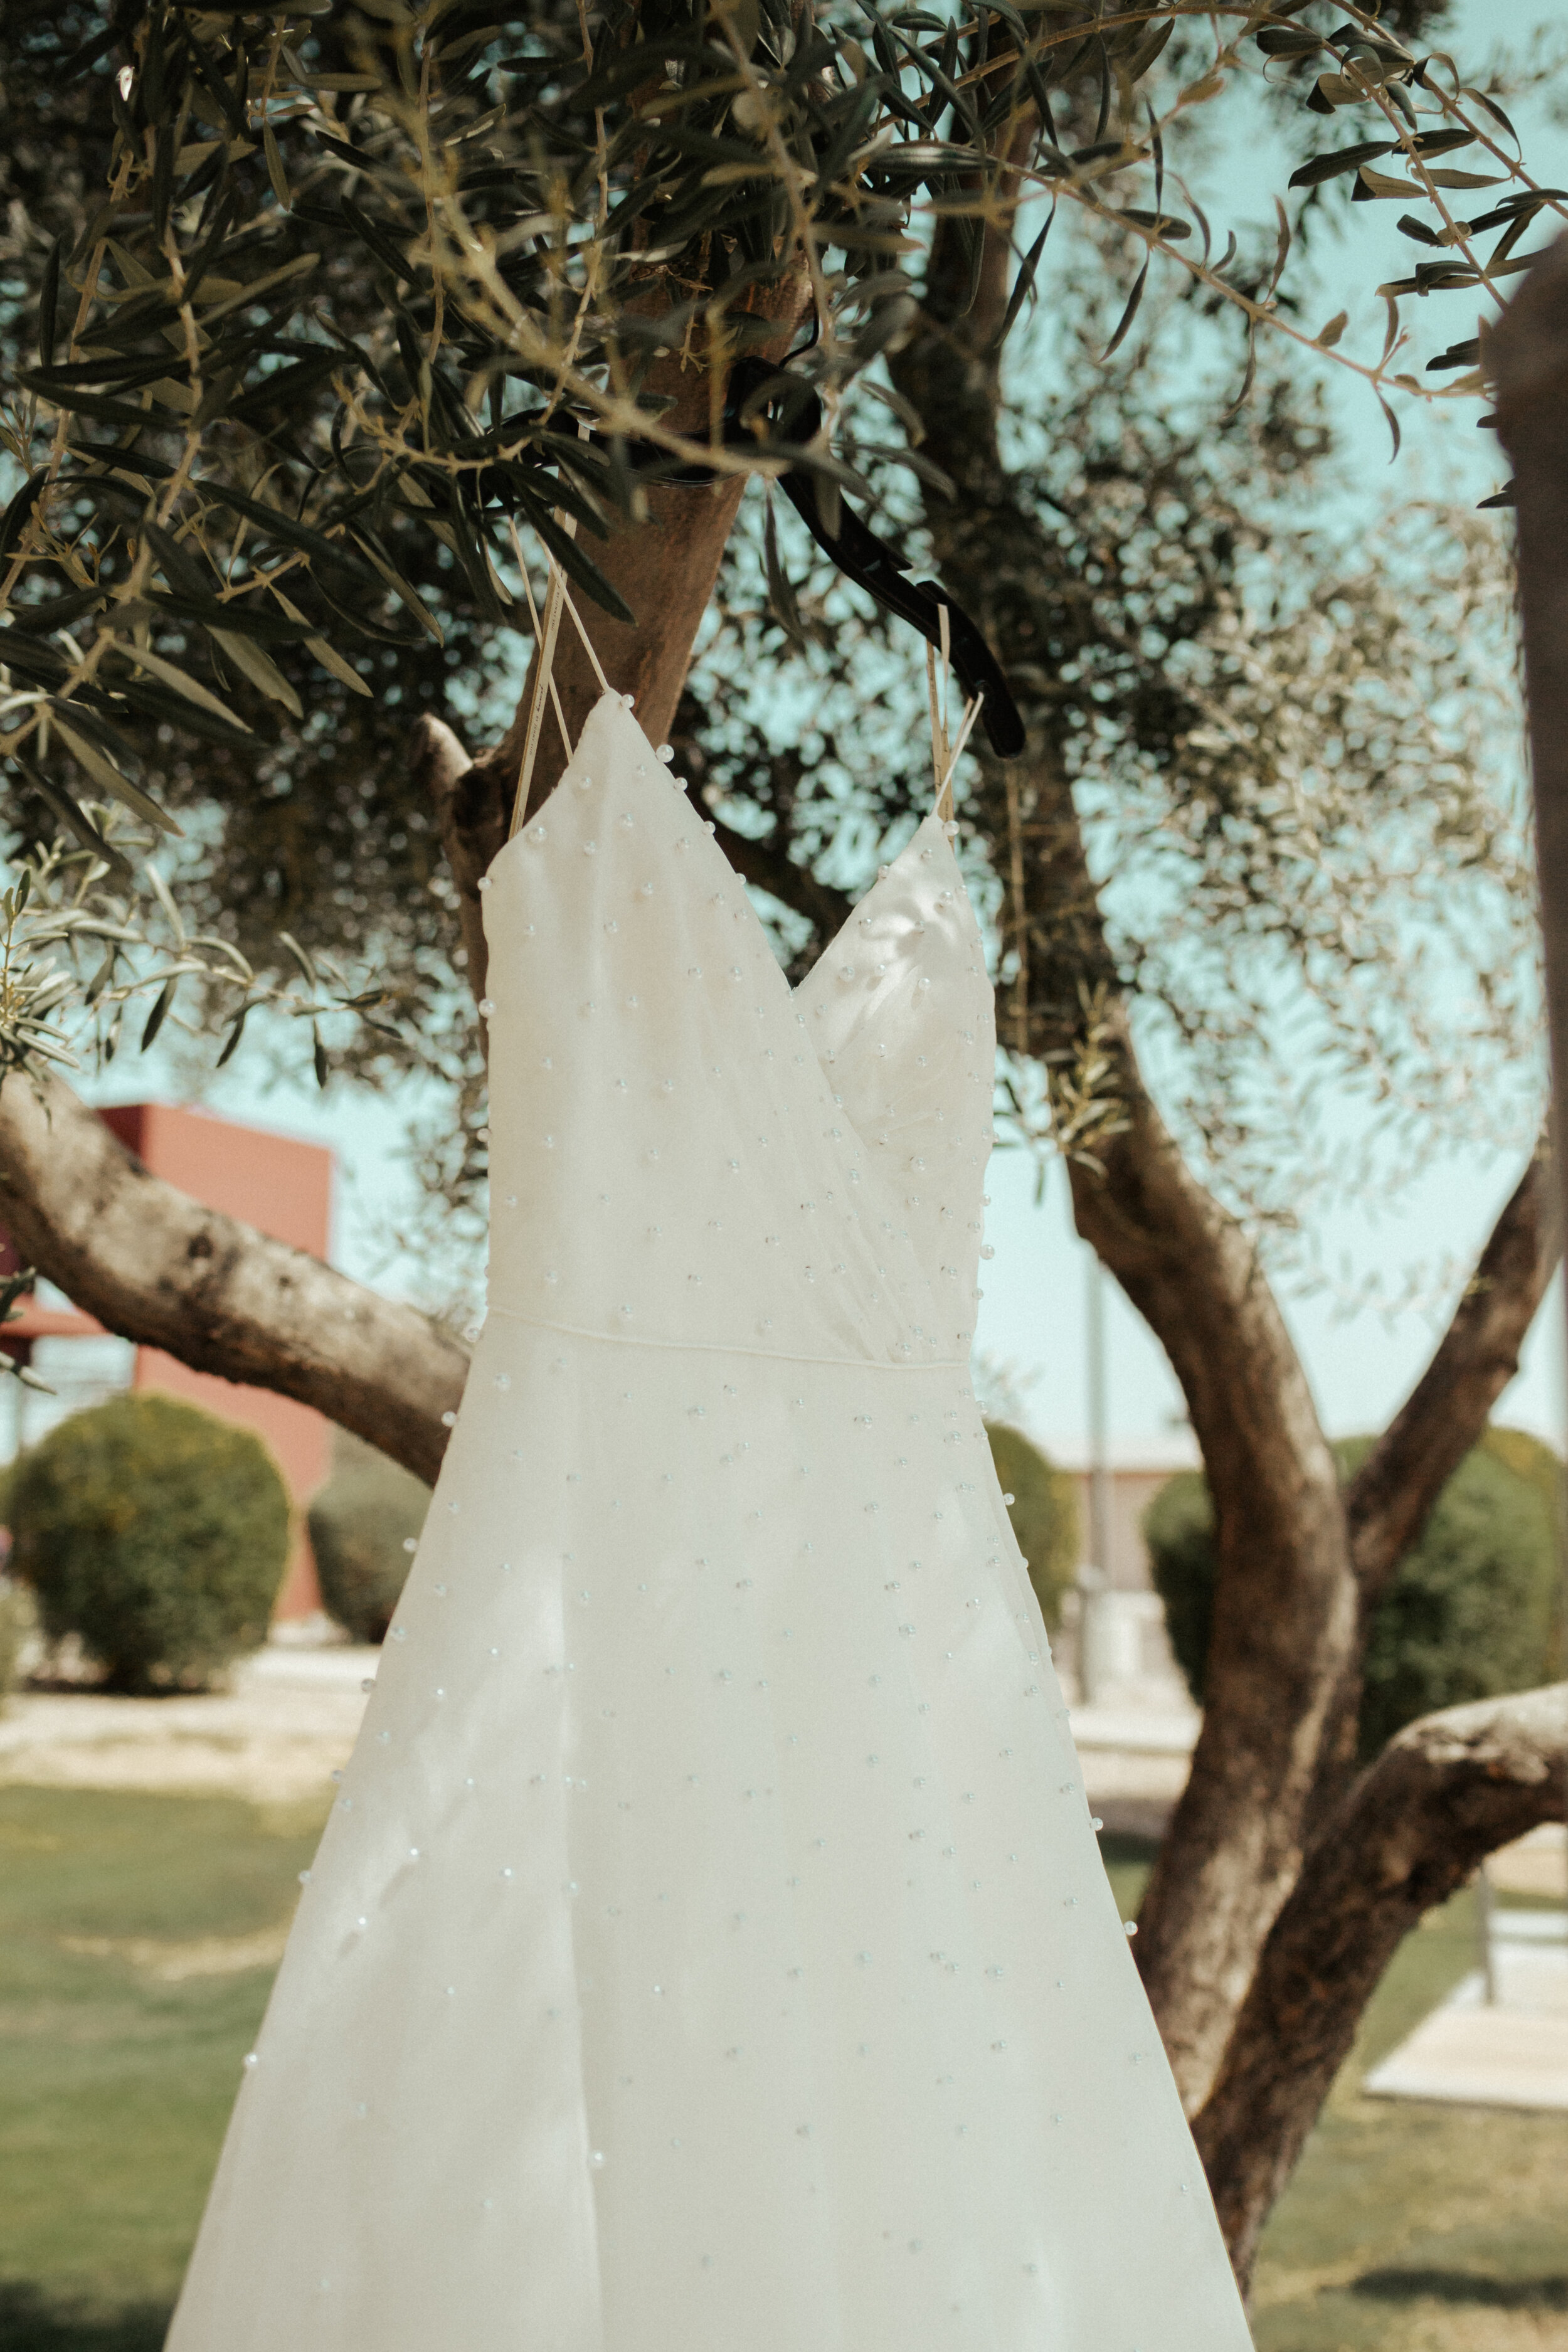 Wedding Dress photo taken in Phoenix, Arizona